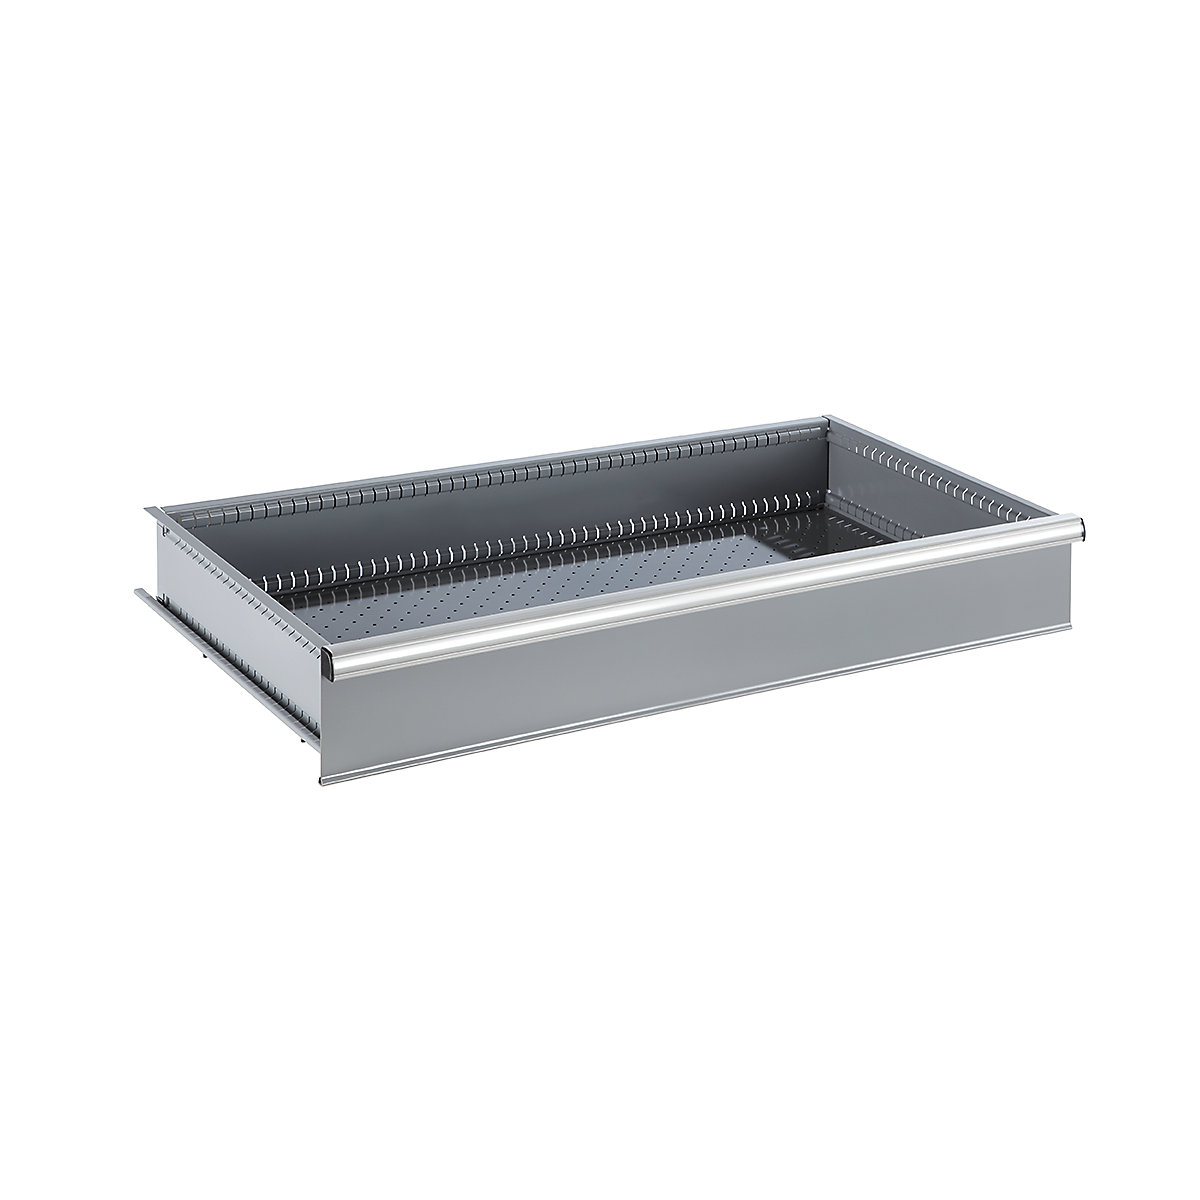 Single drawer – LISTA, WxD 918 x 459 mm, grey, height 182.5 mm-2